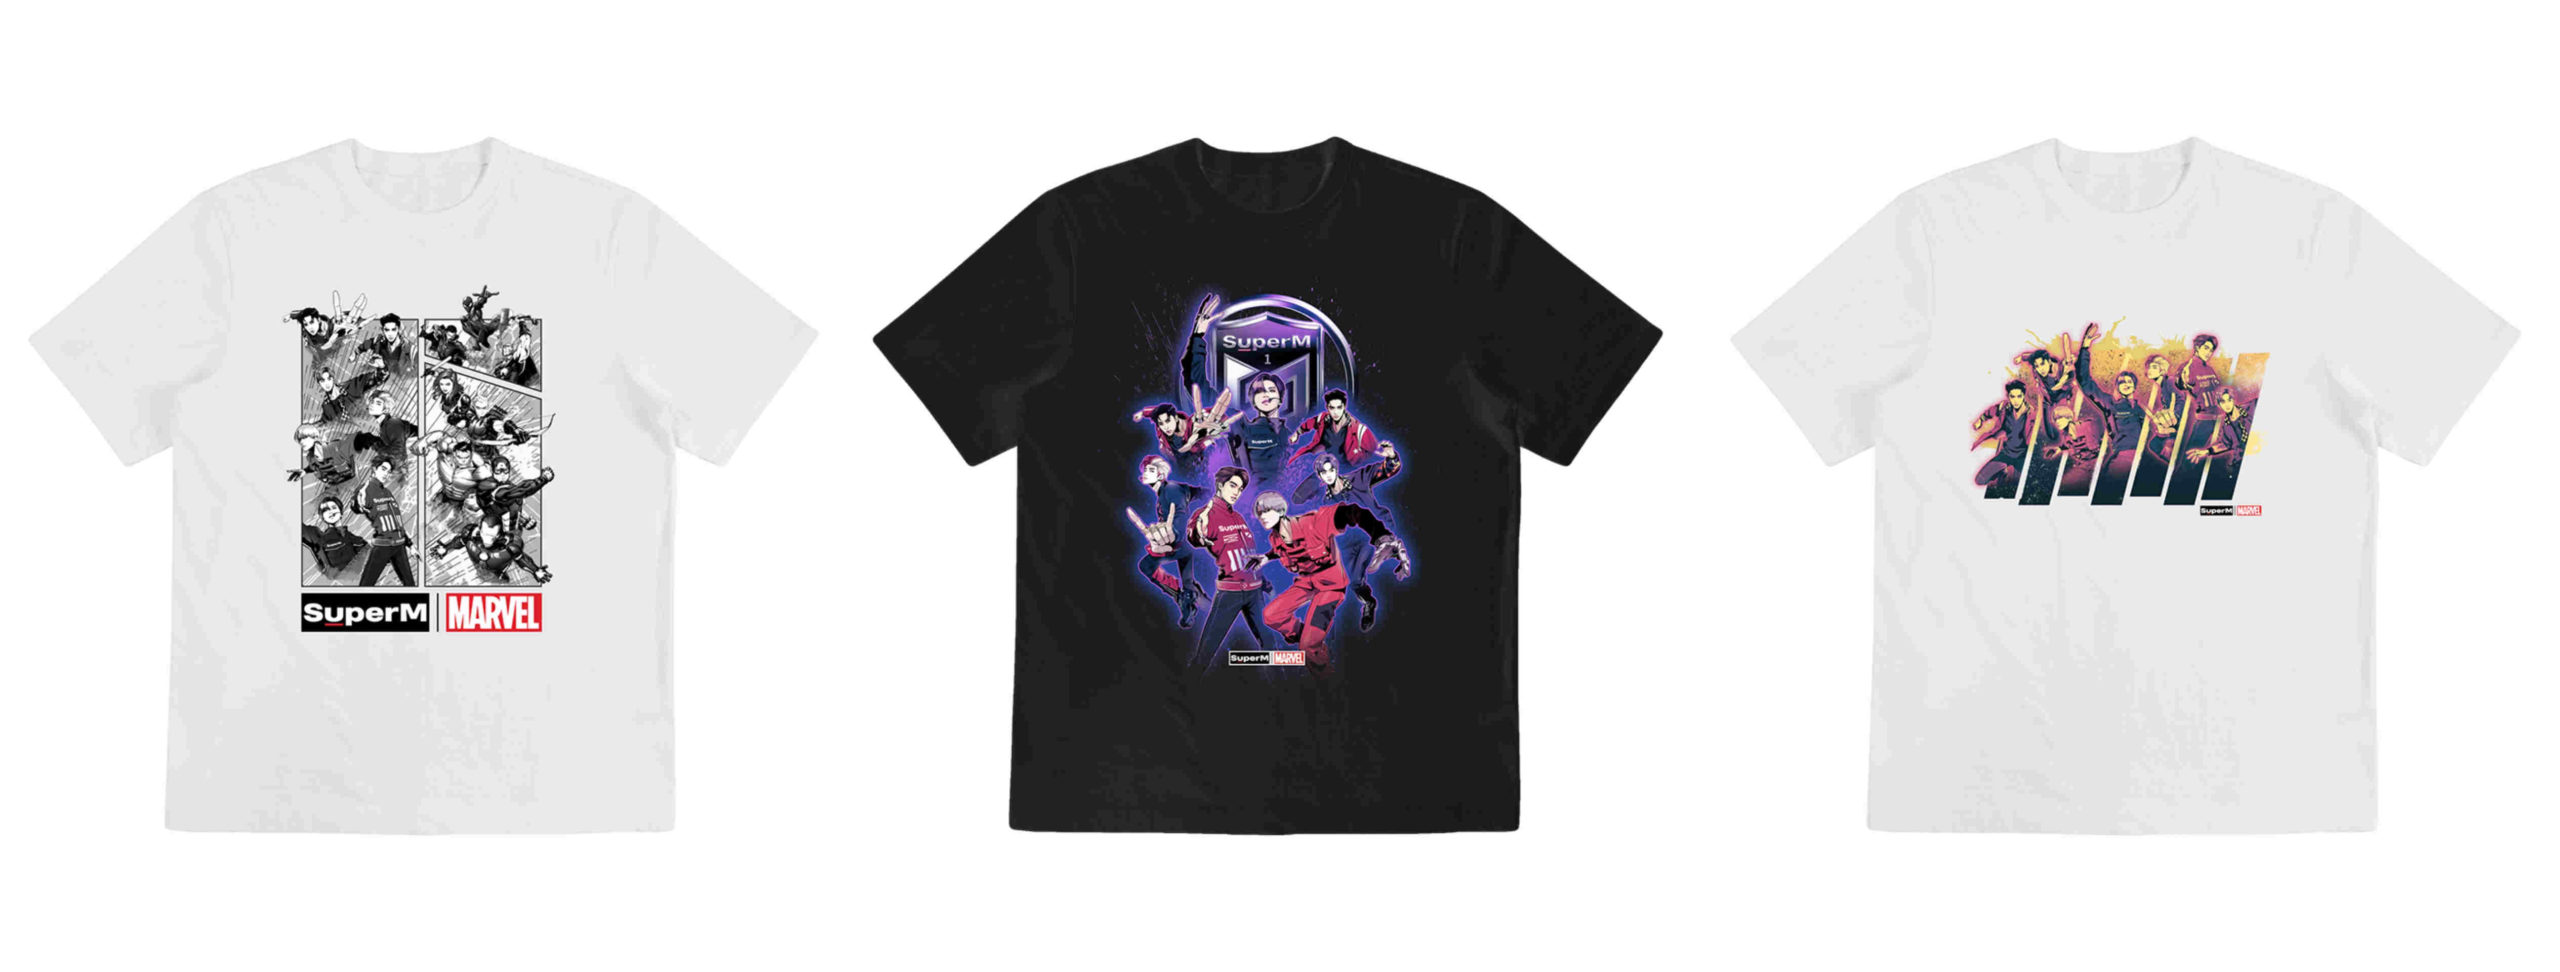 SuperM x Marvel - Graphic T-shirt